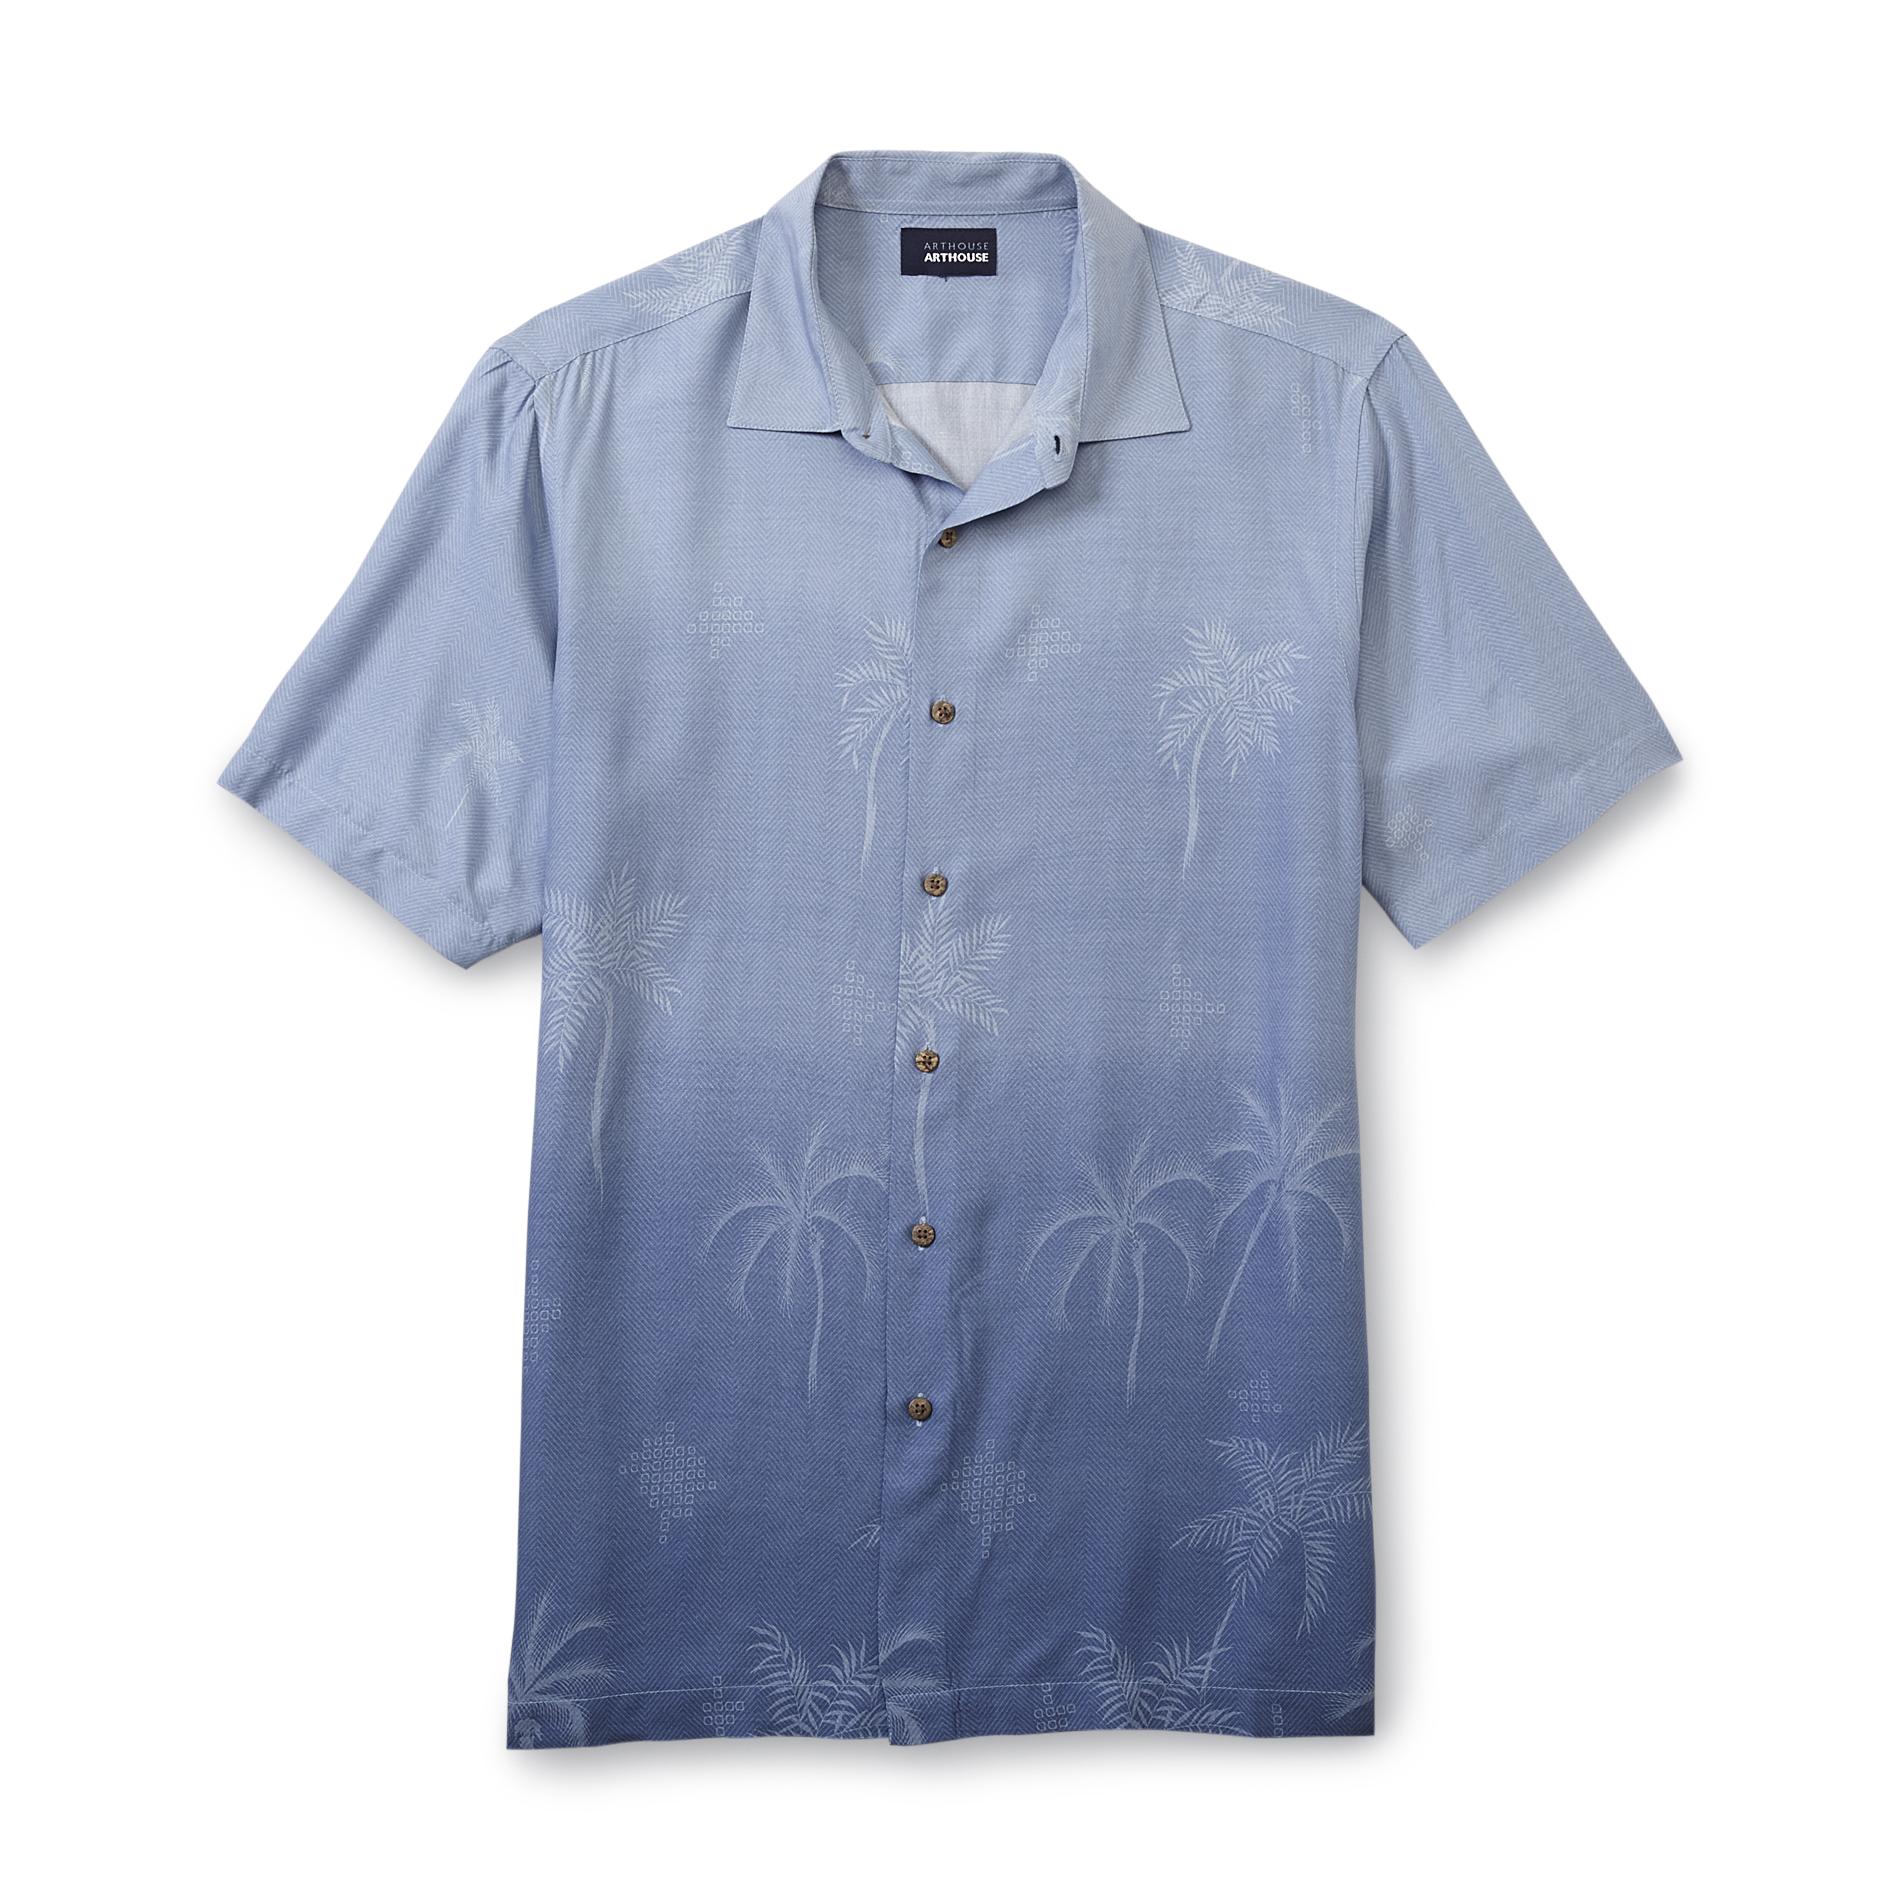 Basic Editions Men's Sport Shirt - Palm Tree